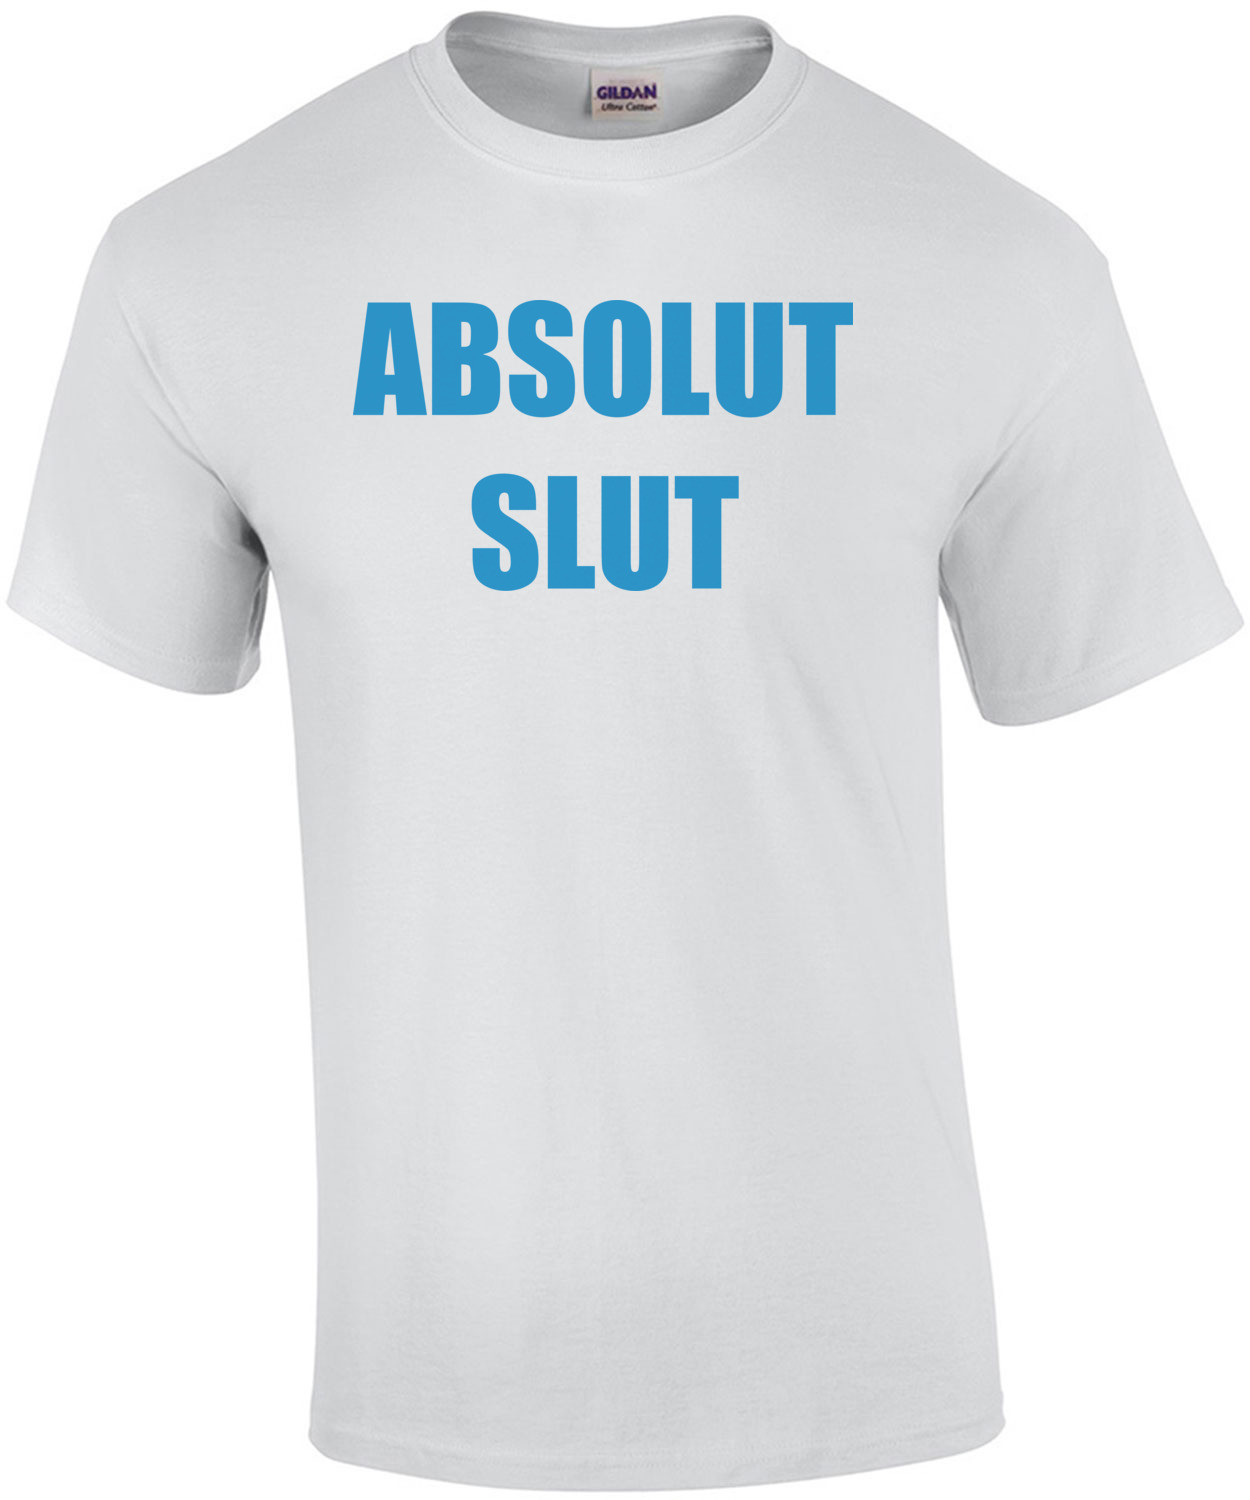 ABSOLUT SLUT - funny t-shirt Shirt